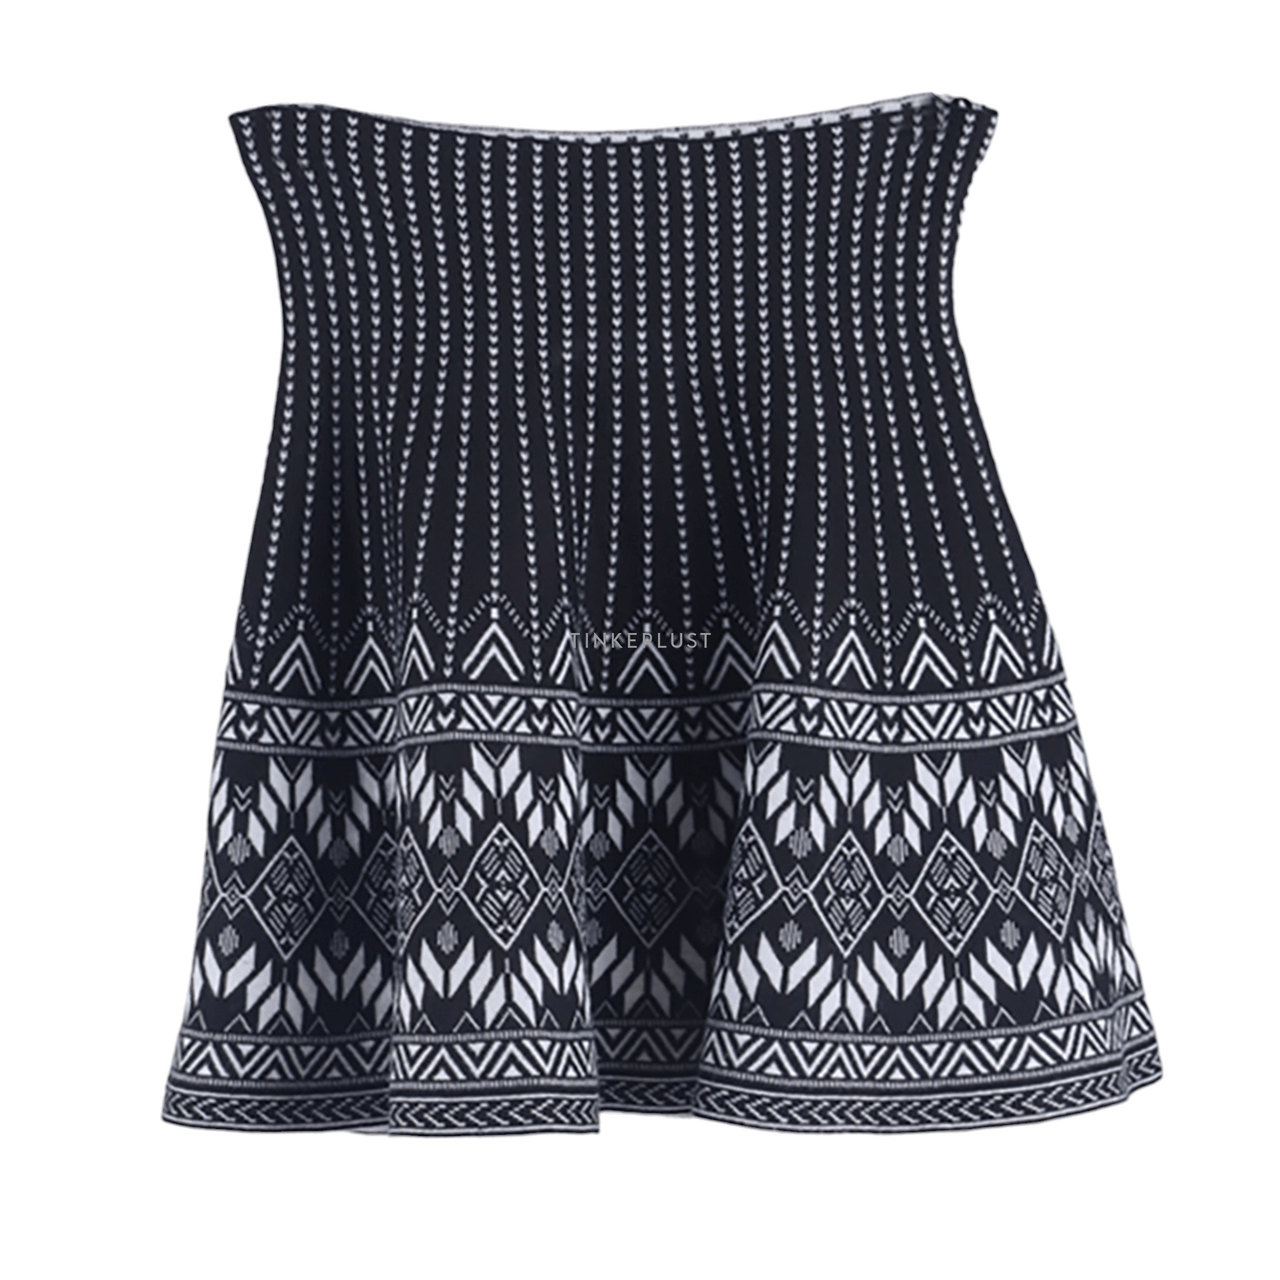 New Look Black & White Pattern Mini Skirt